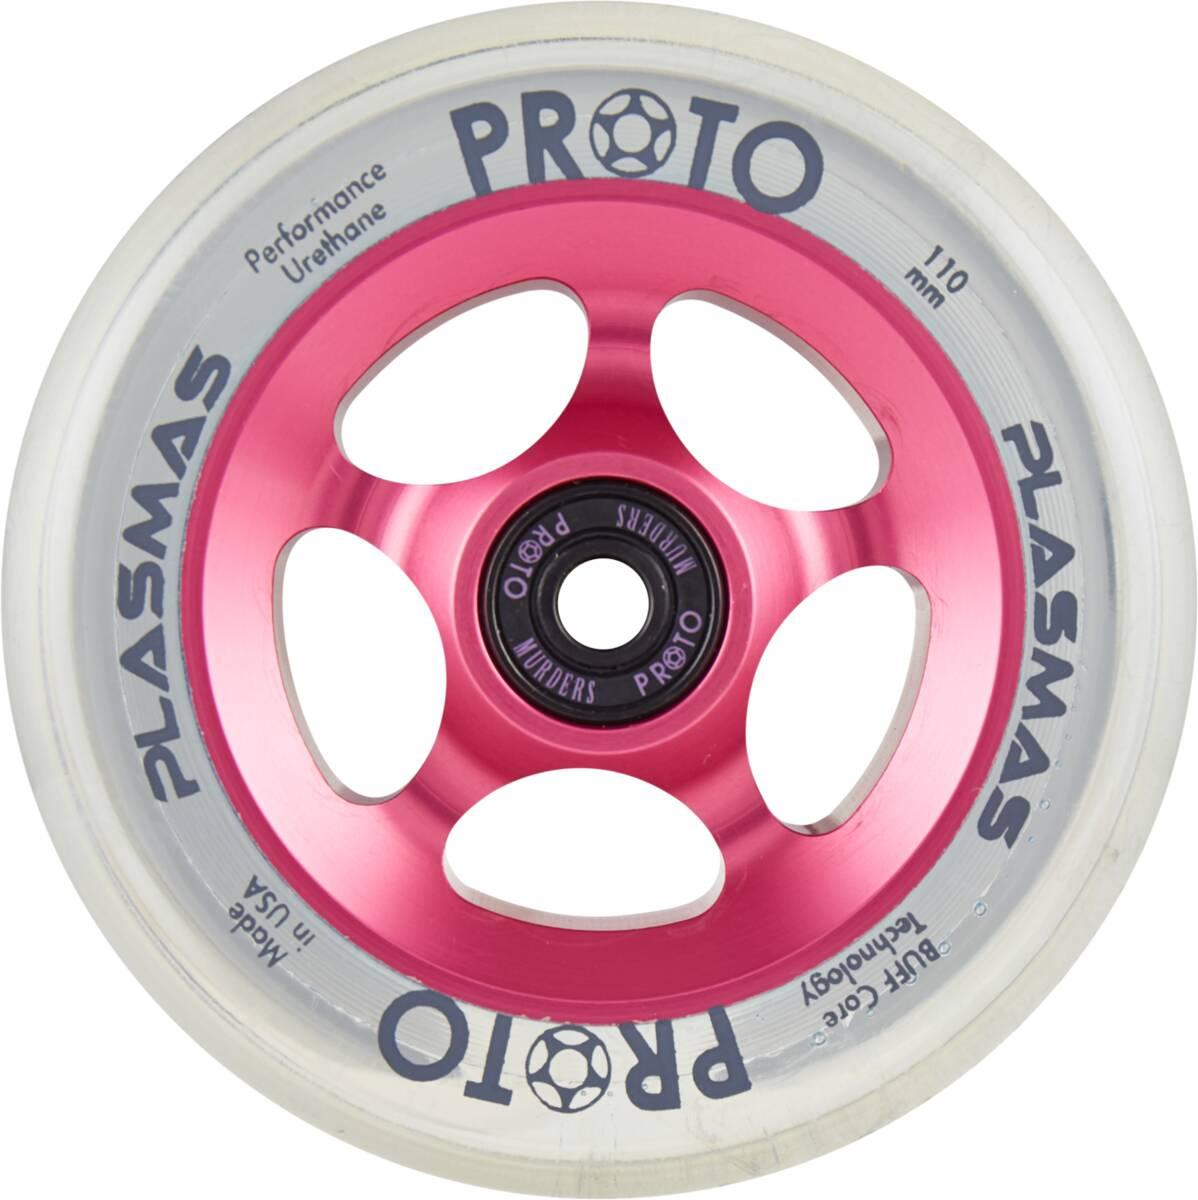 Proto Plasma Pro Scooter Wheels 2-Pack